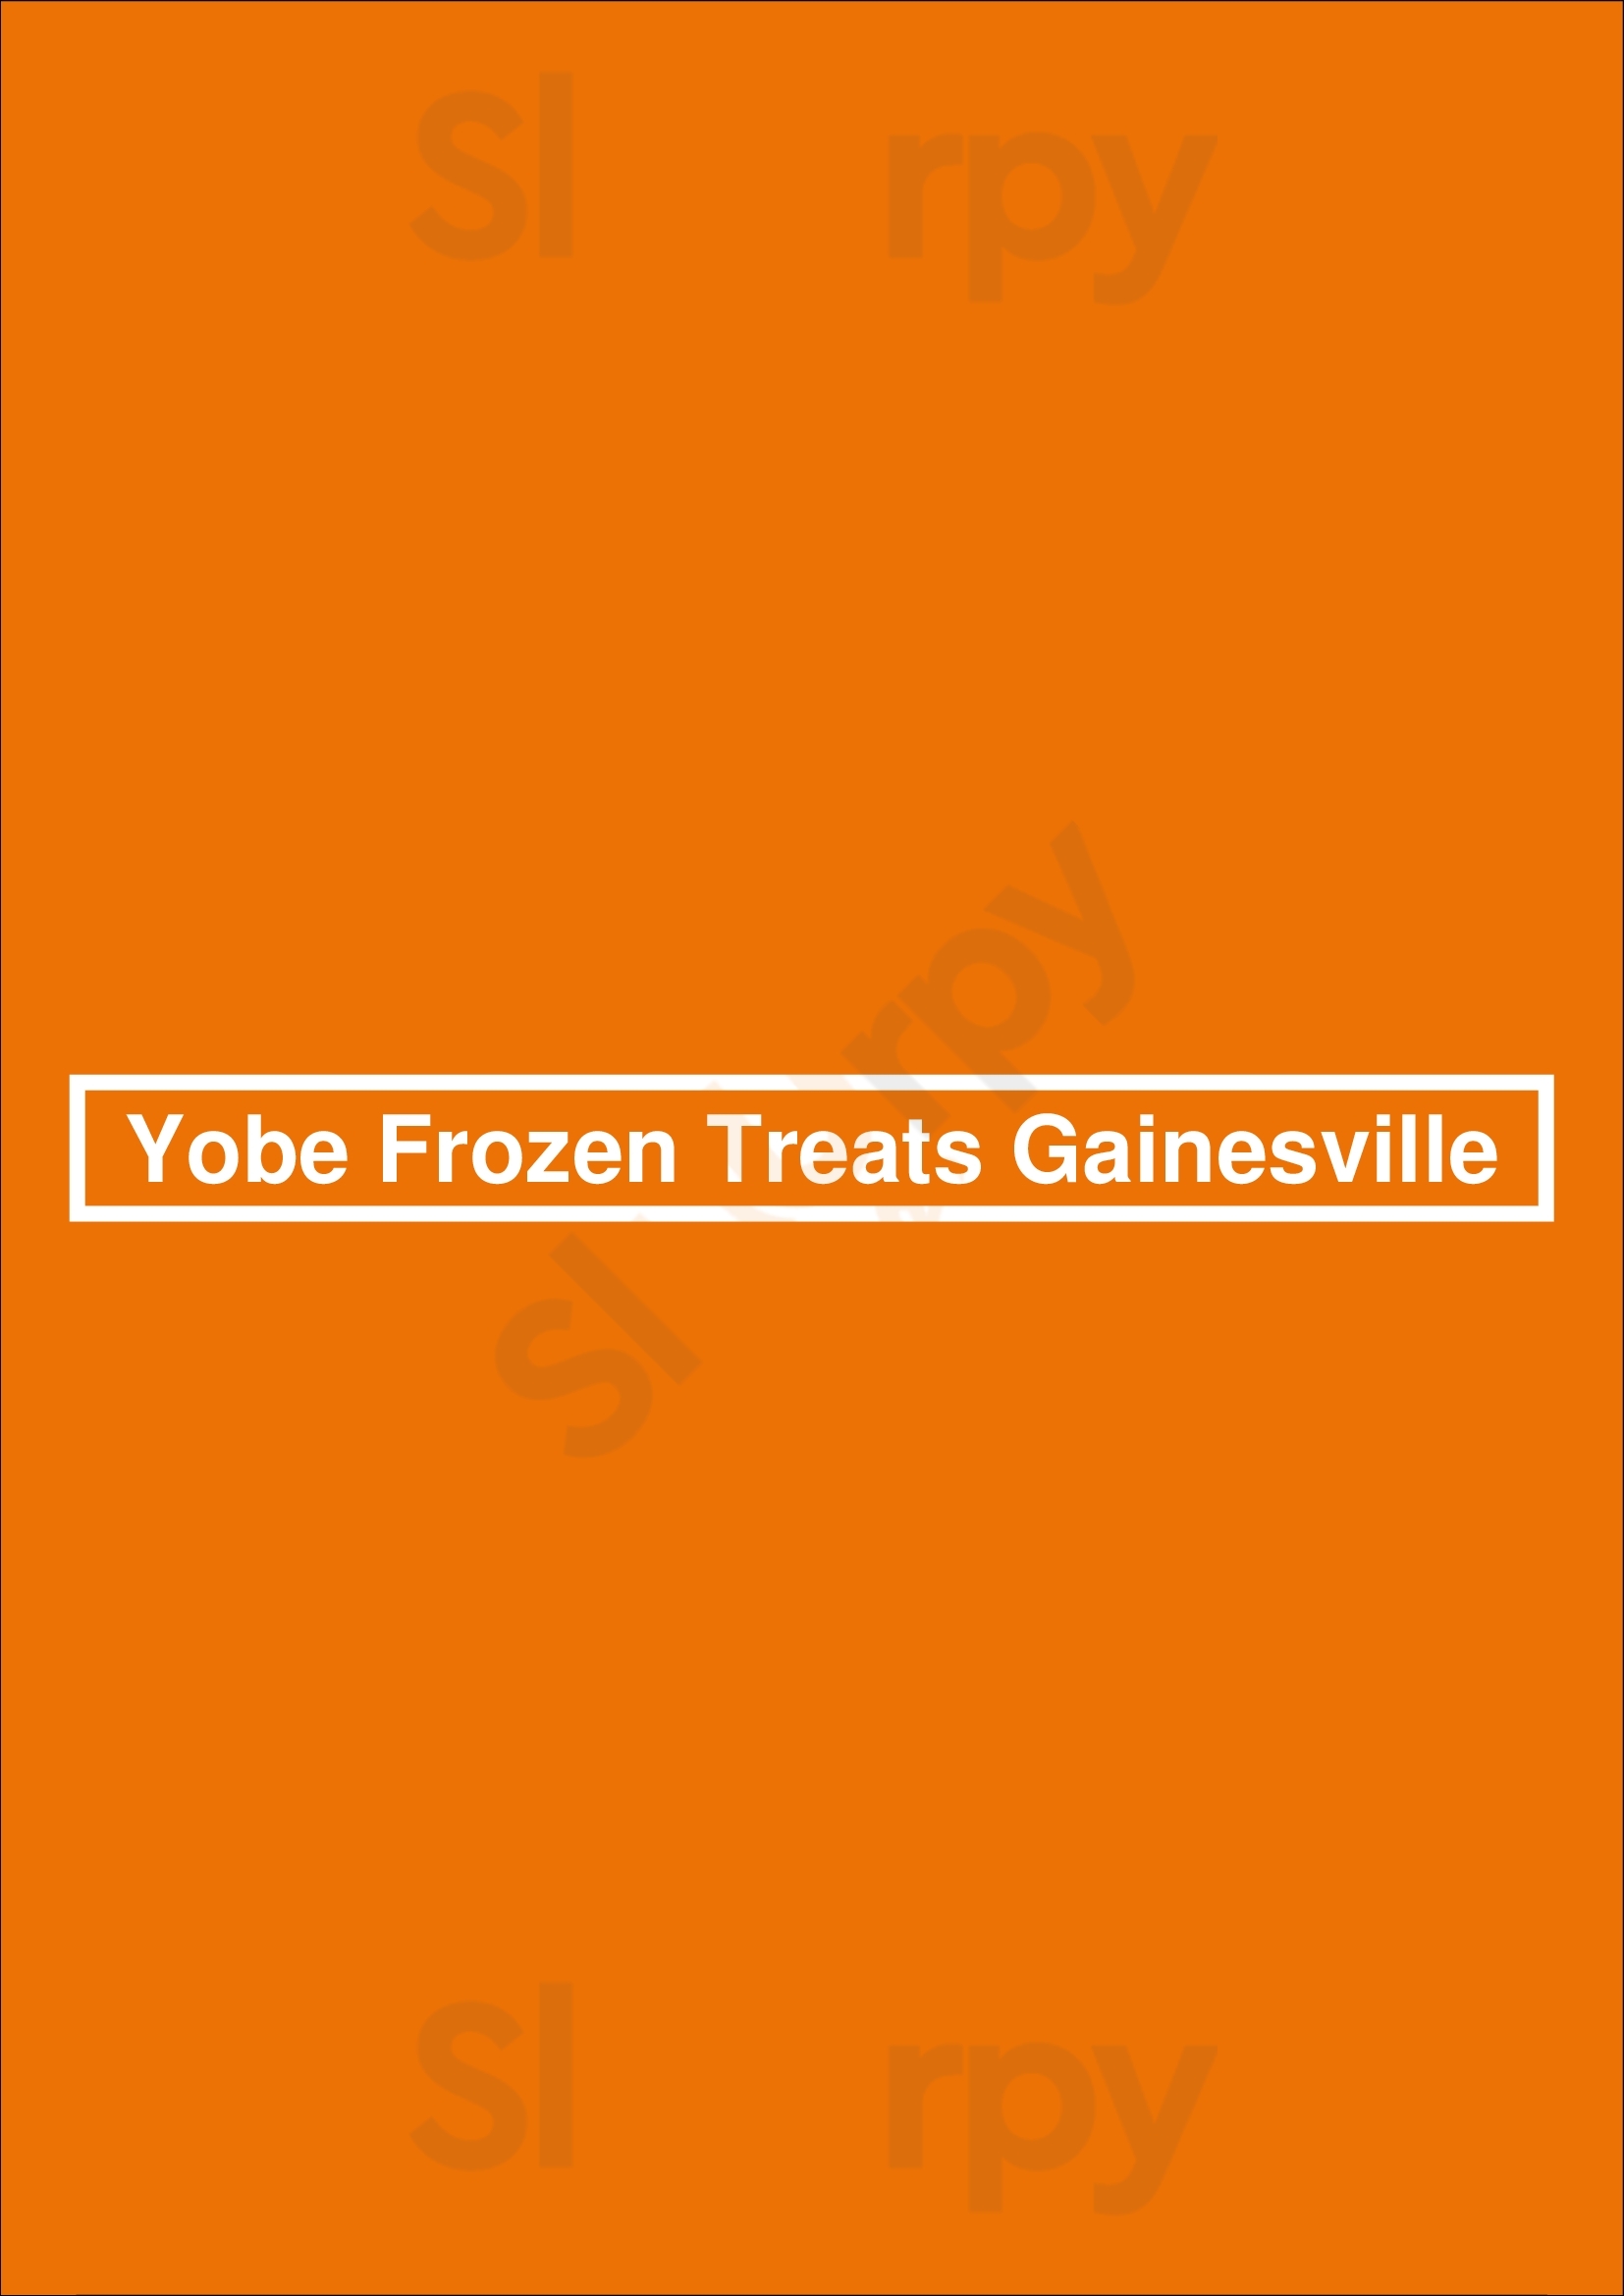 Yobe Frozen Treats Gainesville Gainesville Menu - 1